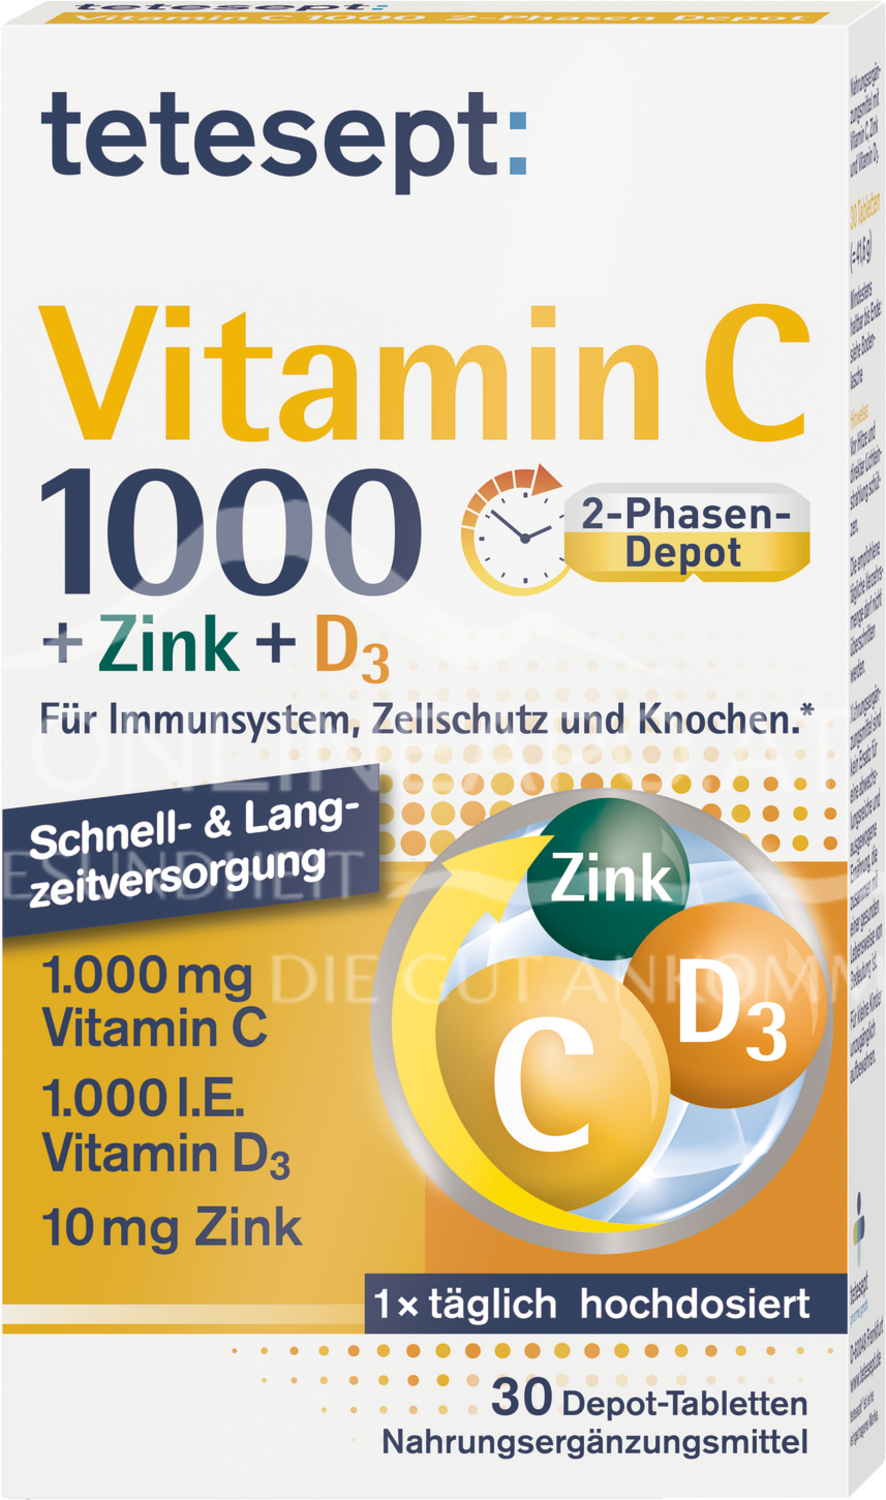 tetesept Vitamin C 1000 + Zink + D3 Tabletten